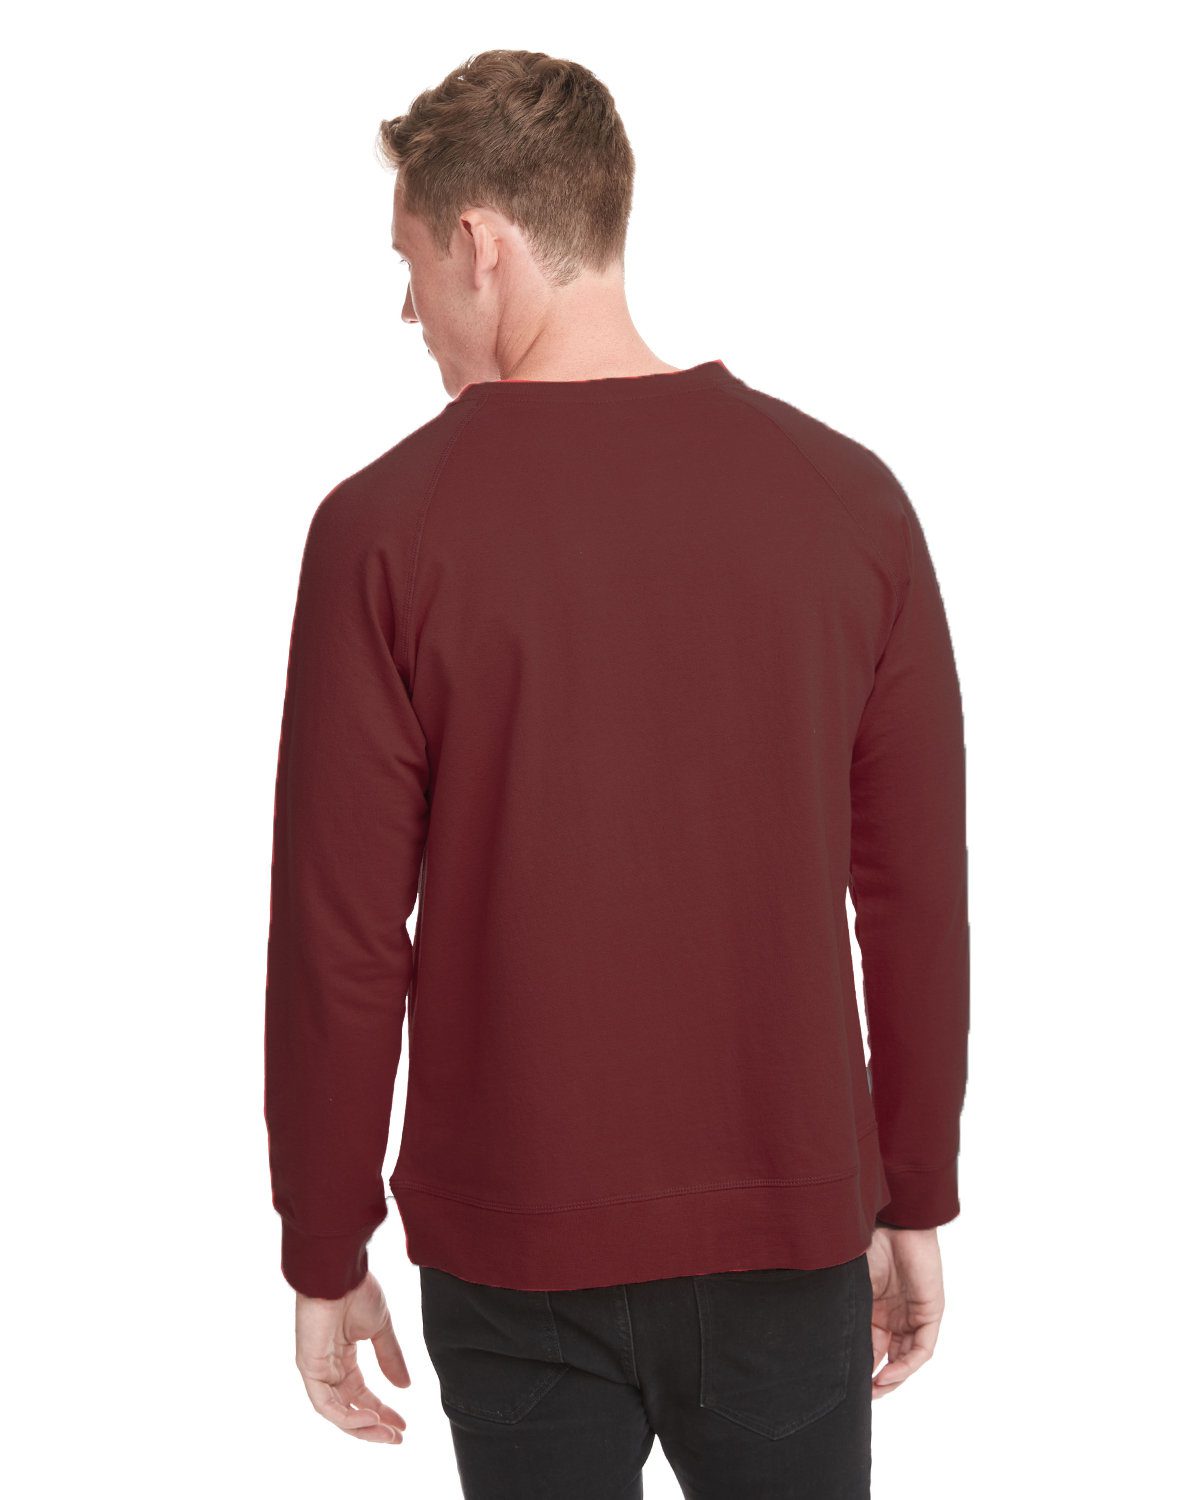 Next Level Unisex Laguna French Terry Raglan Sweatshirt #N9000 Cardinal Red Back